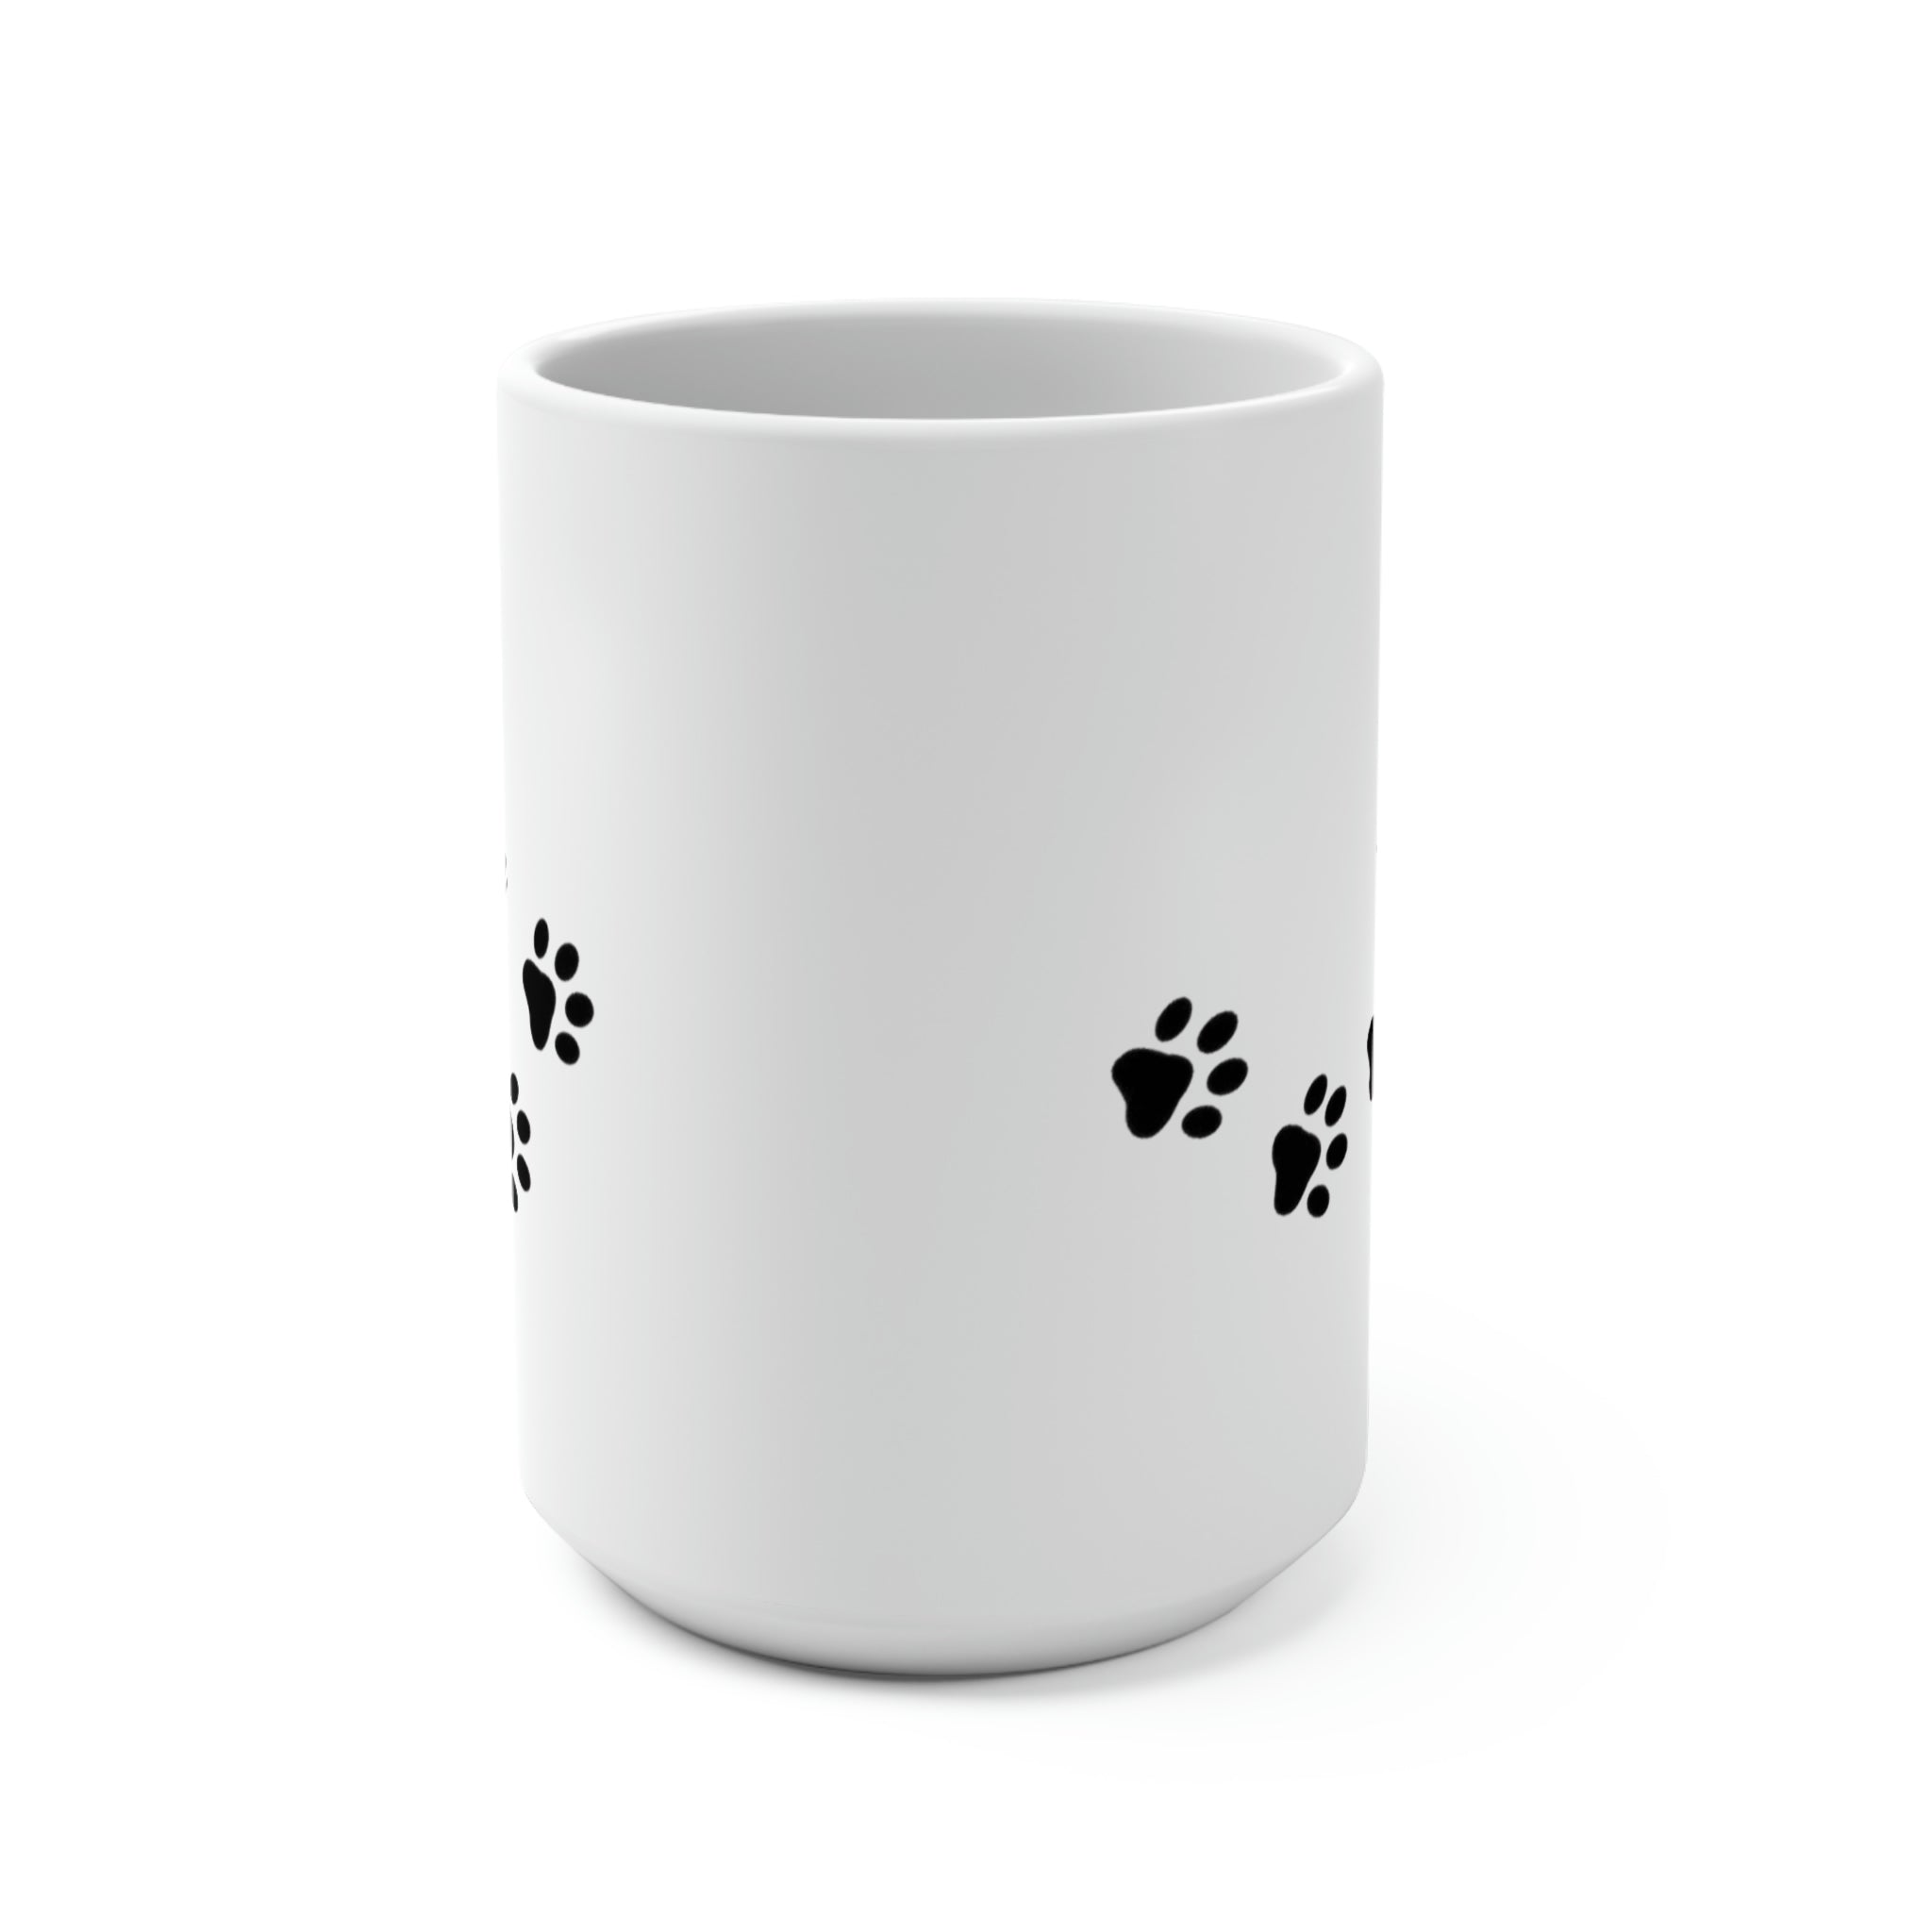 DOG MOM - Novelty Coffee Mug - 15oz